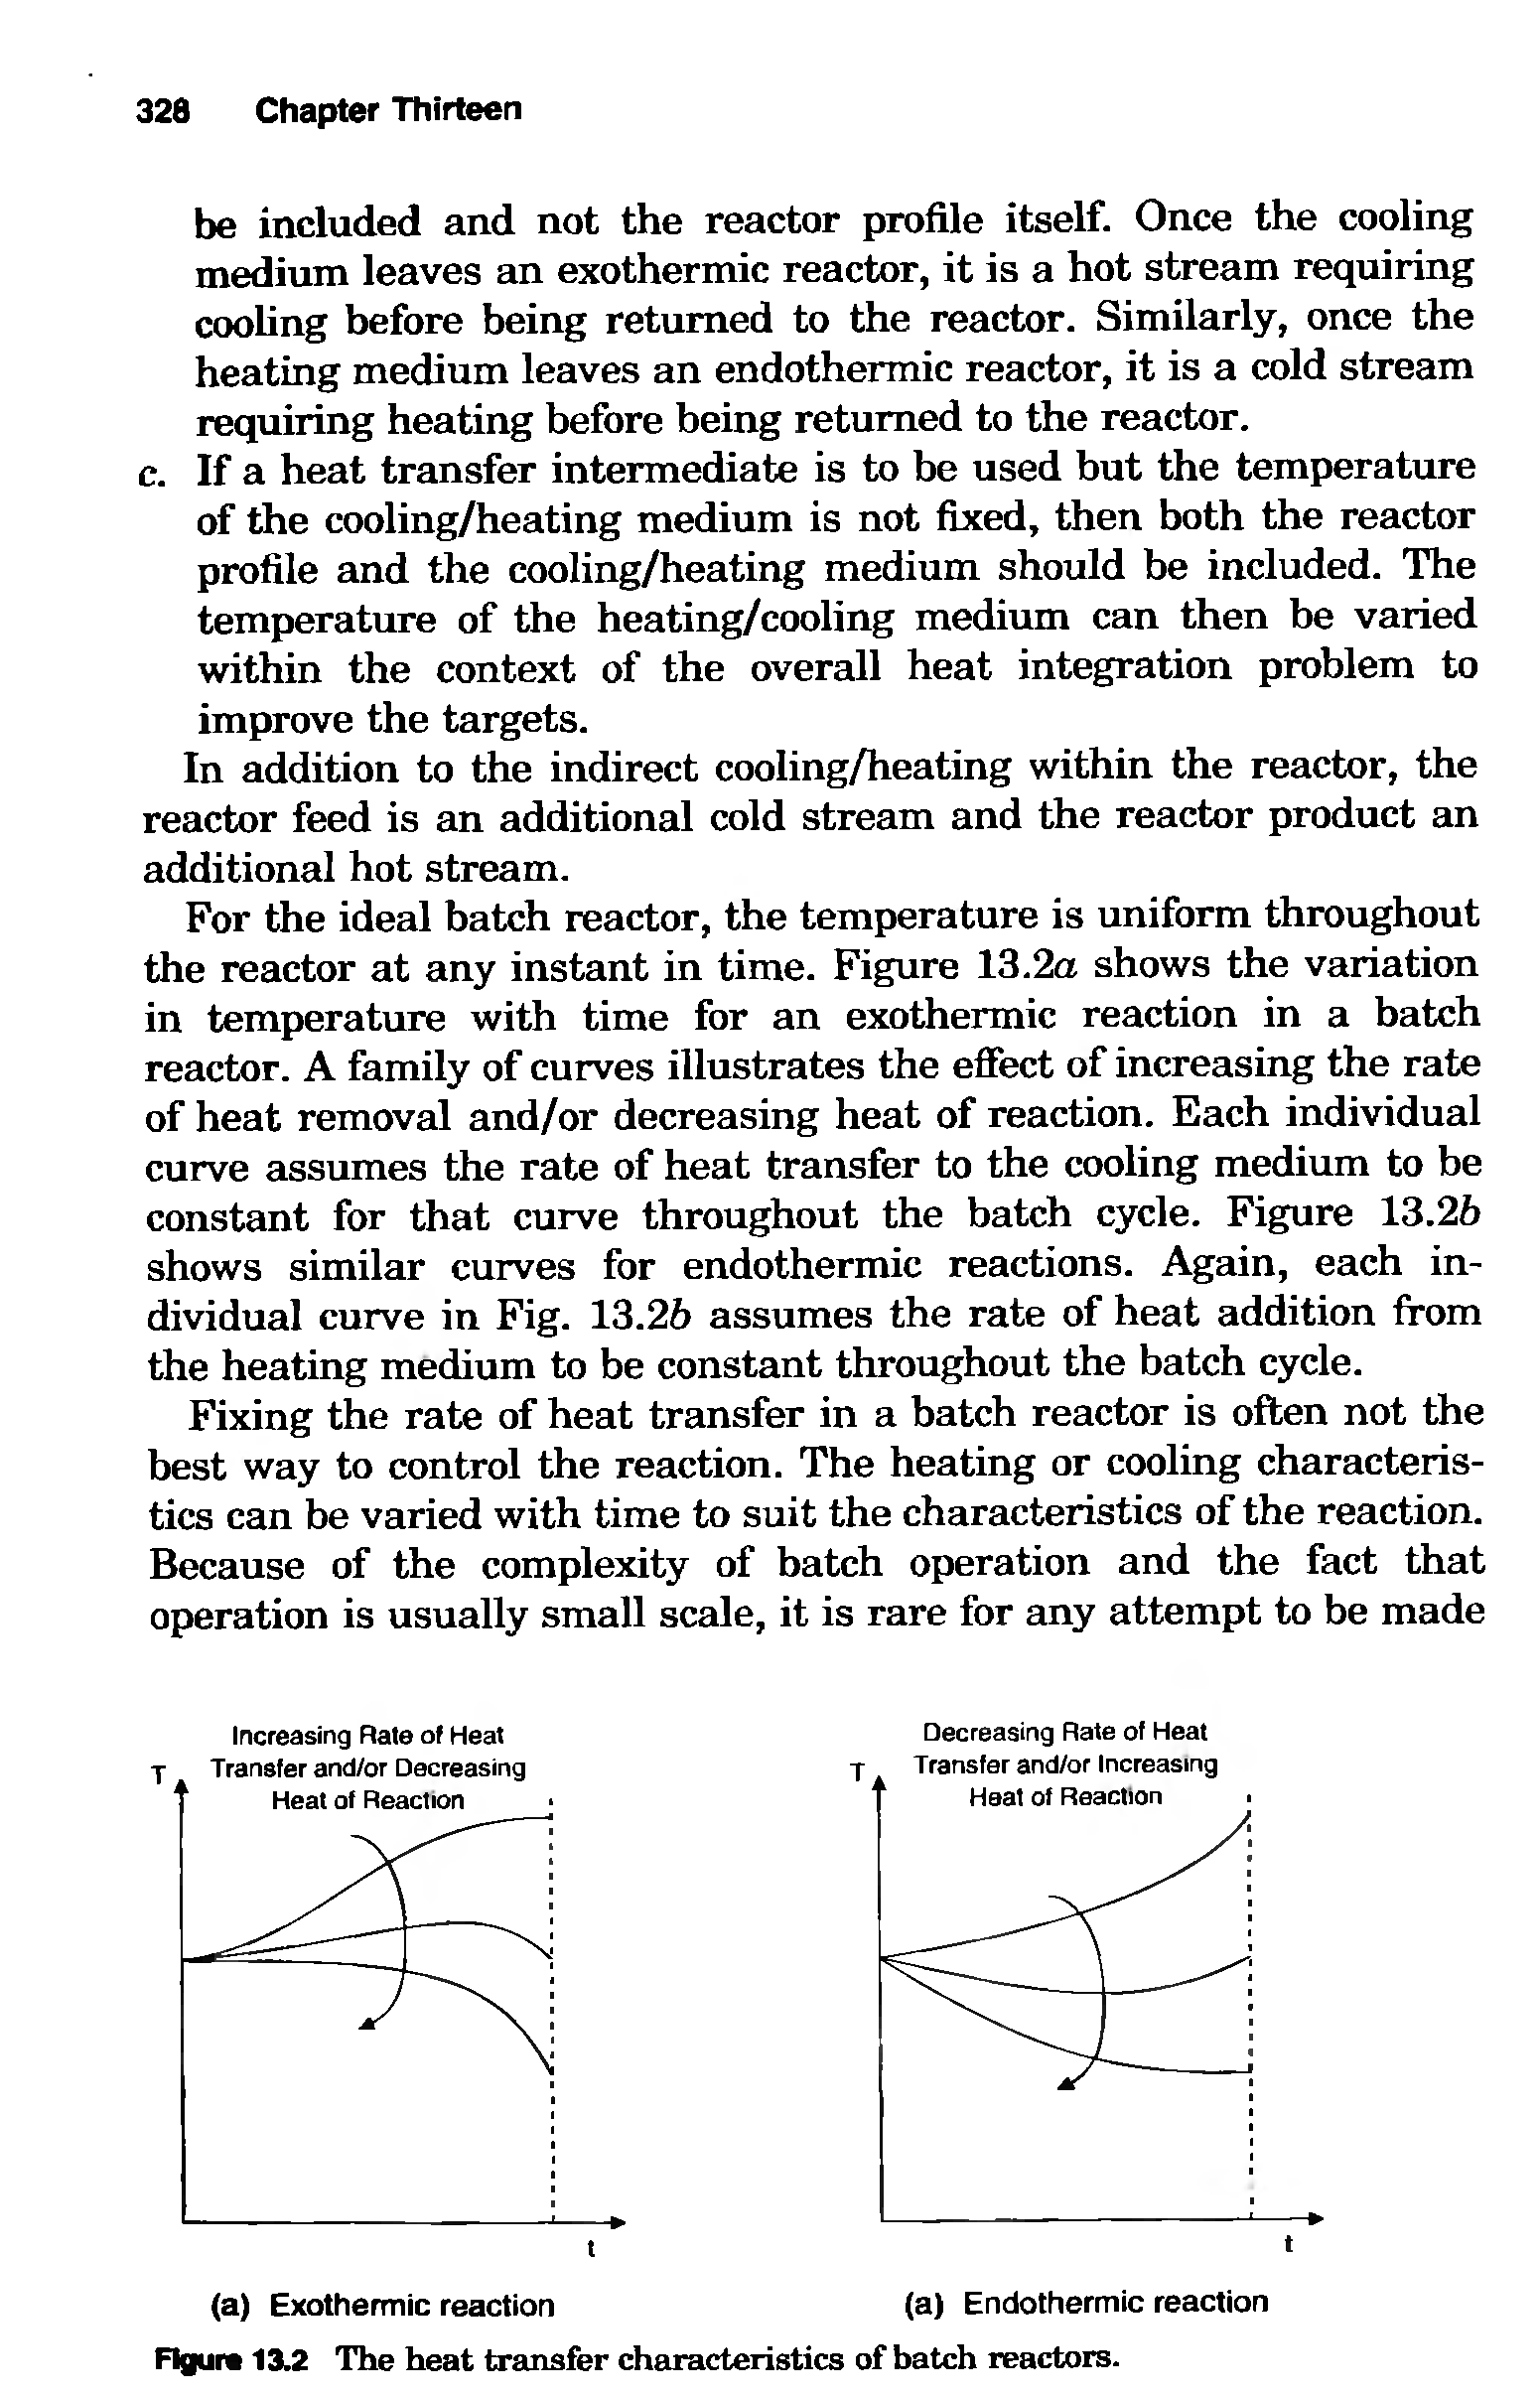 Figure 13.2 The heat transfer characteristics of batch reactors.